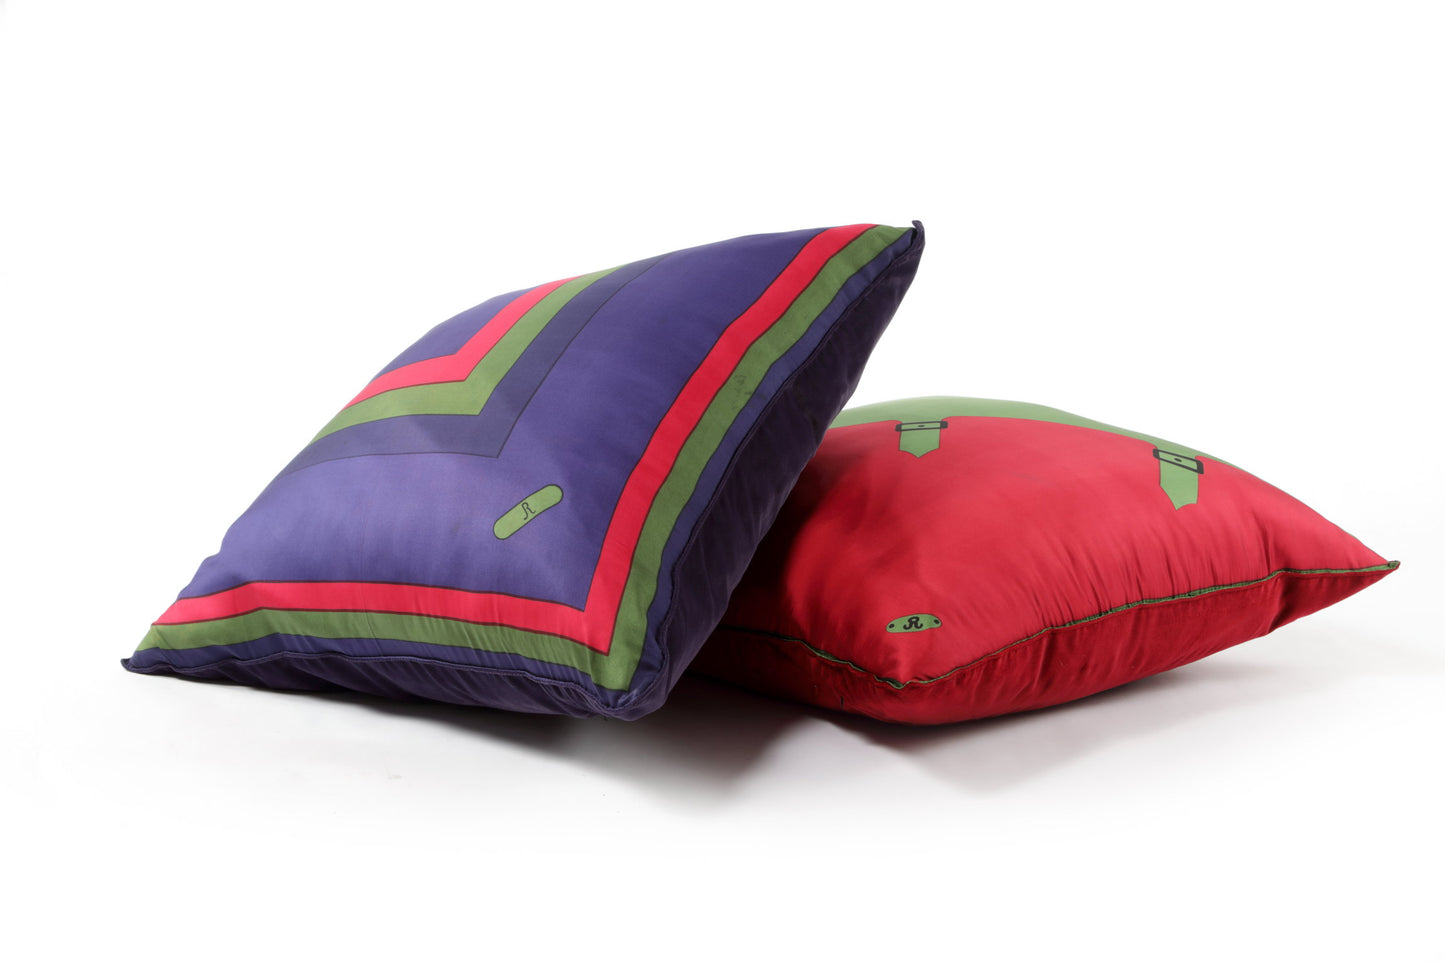 Maxi cushion reinterpreted triplef with original Roberta di Camerino scarf with buckle motif